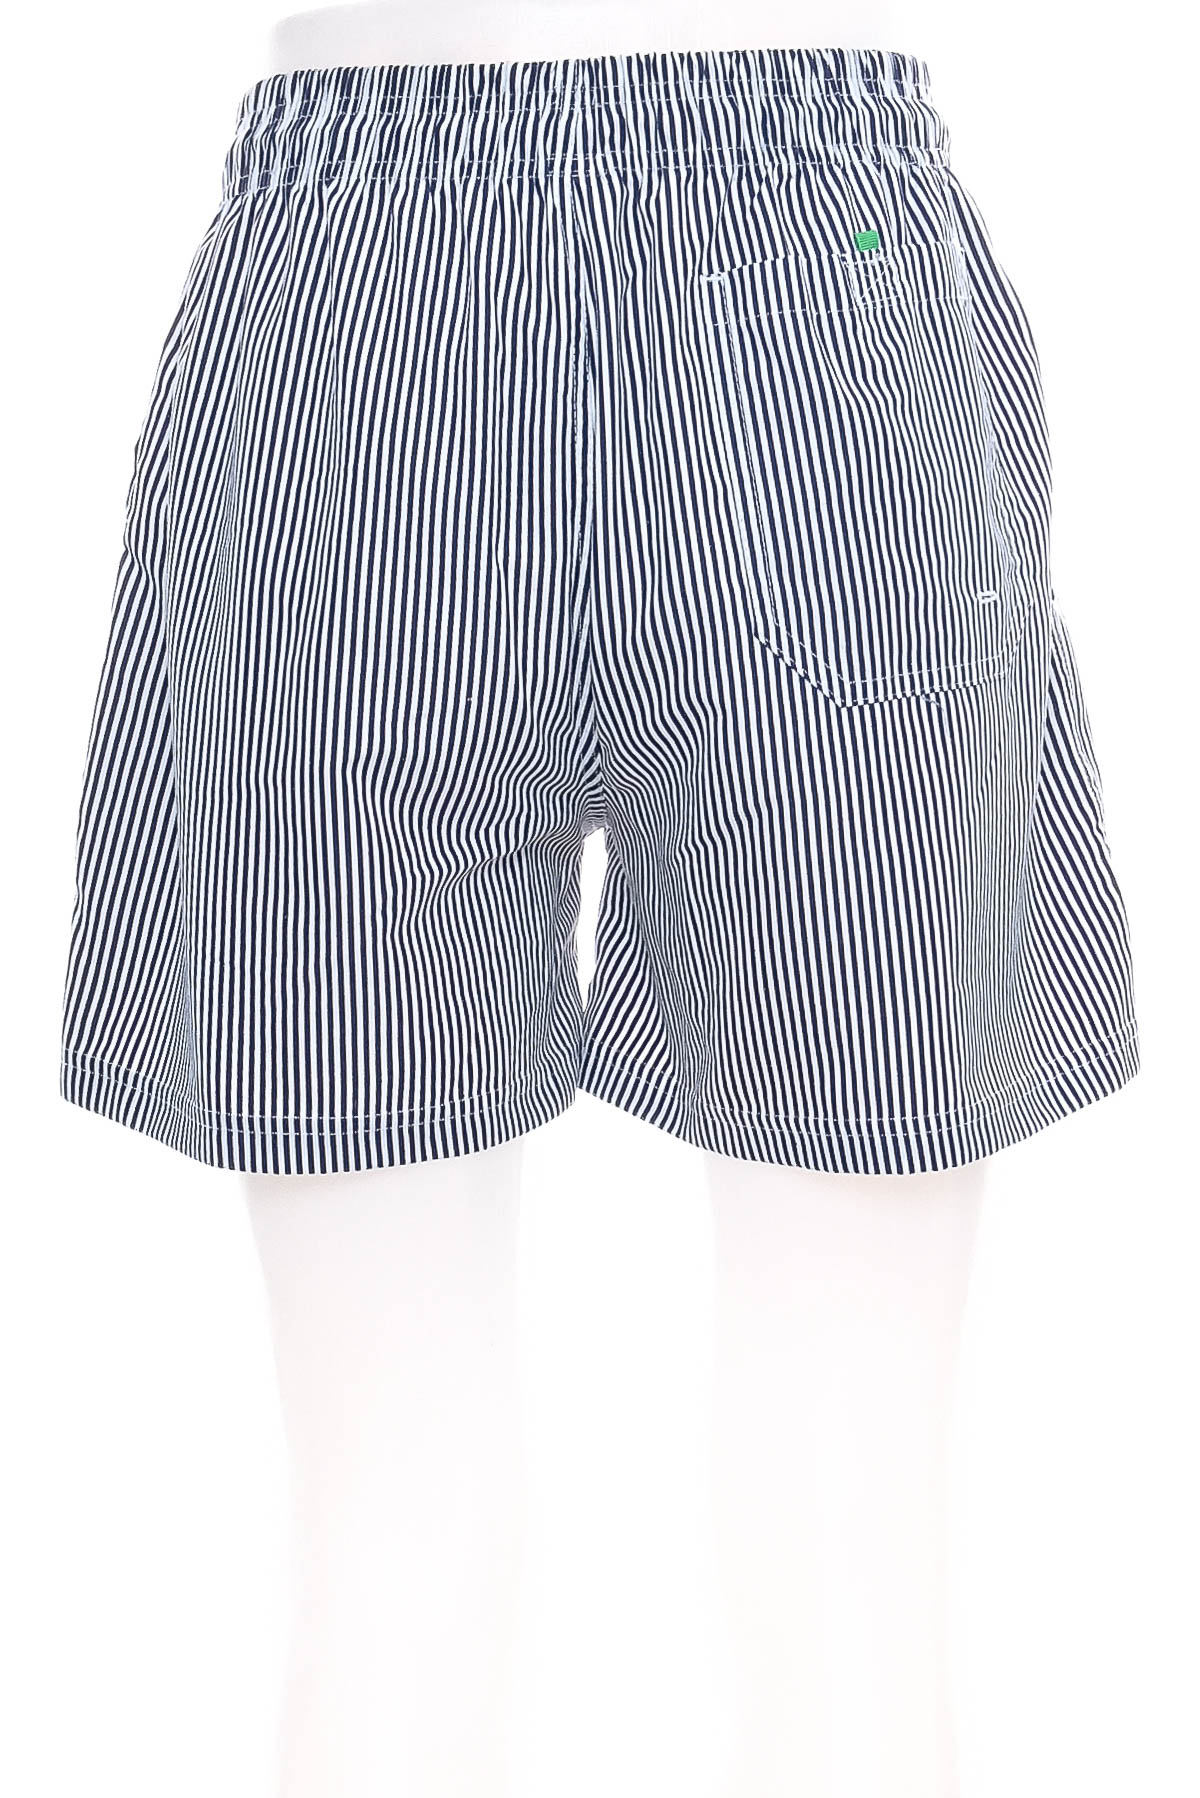 Men's shorts - GRCF - 1